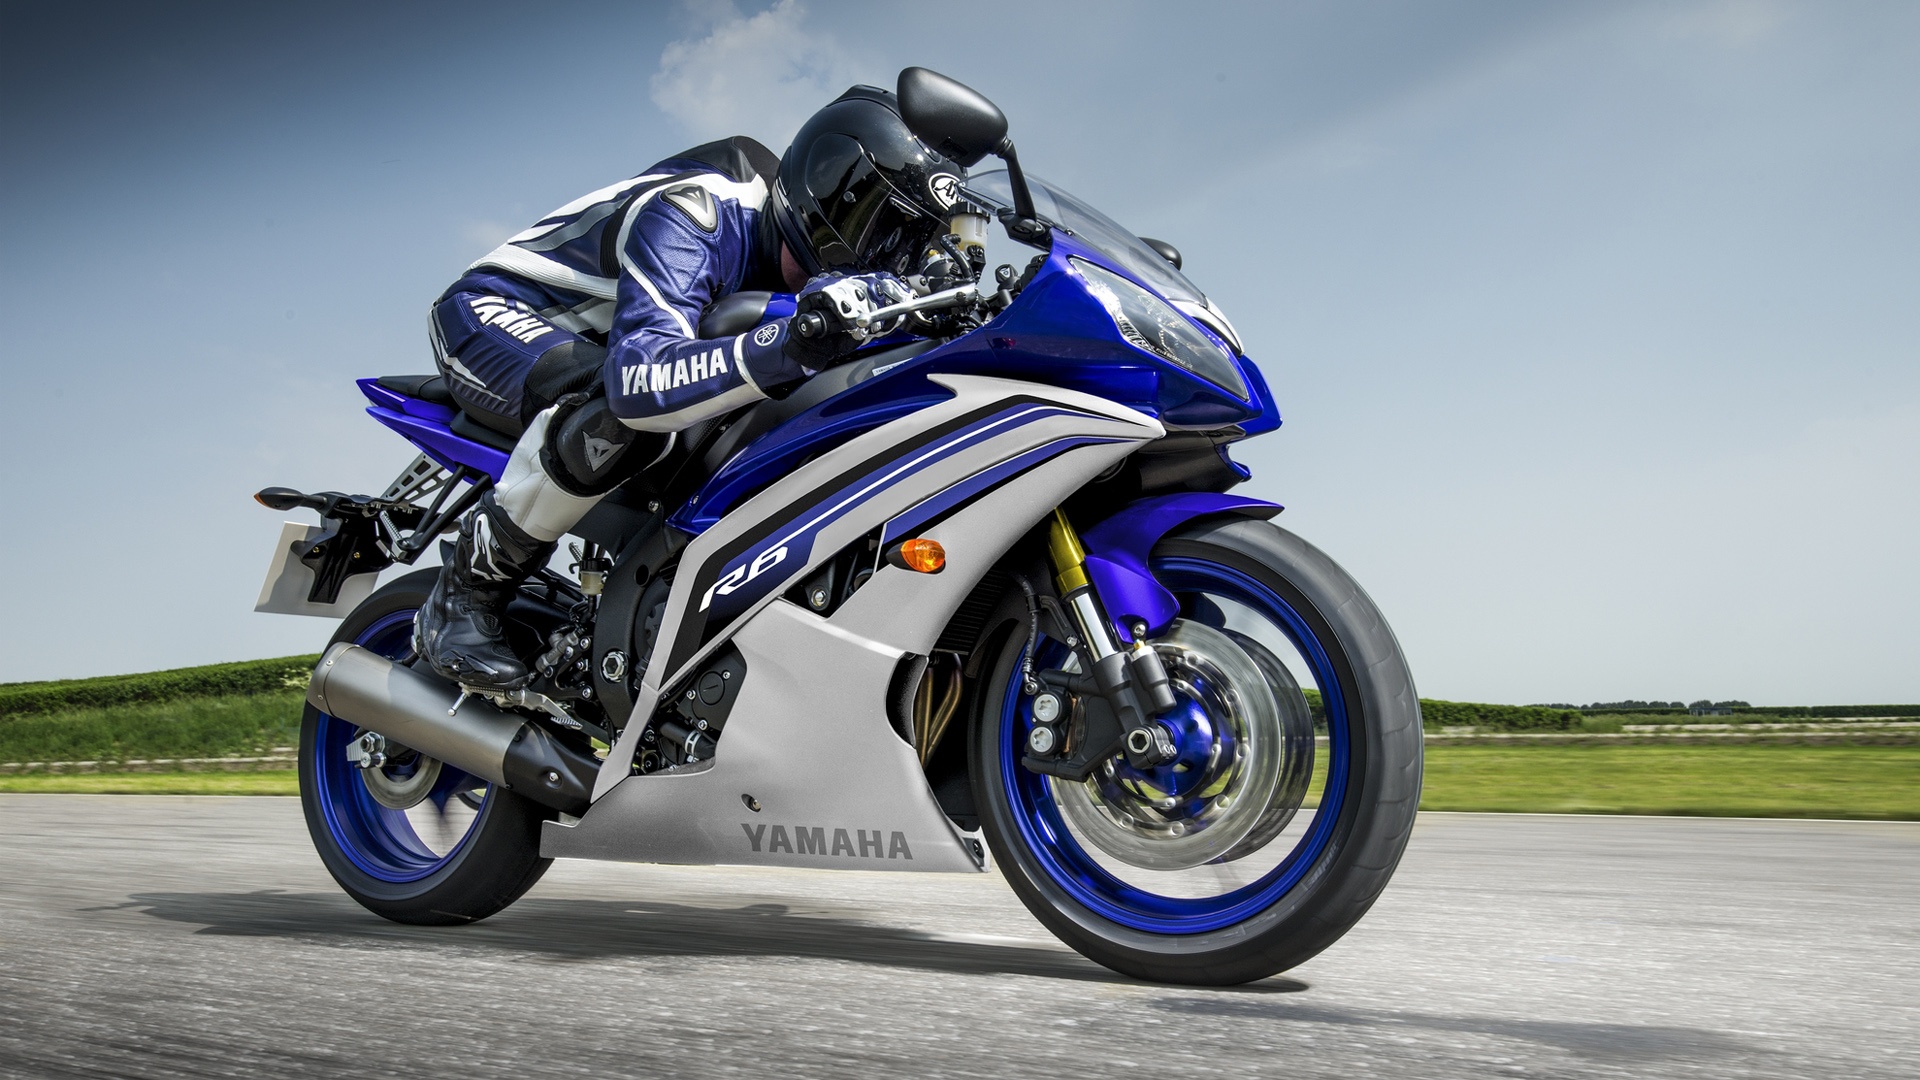 General 1920x1080 motorcycle vehicle Yamaha nature sky driving photography Blue Motorcycles Japanese motorcycles